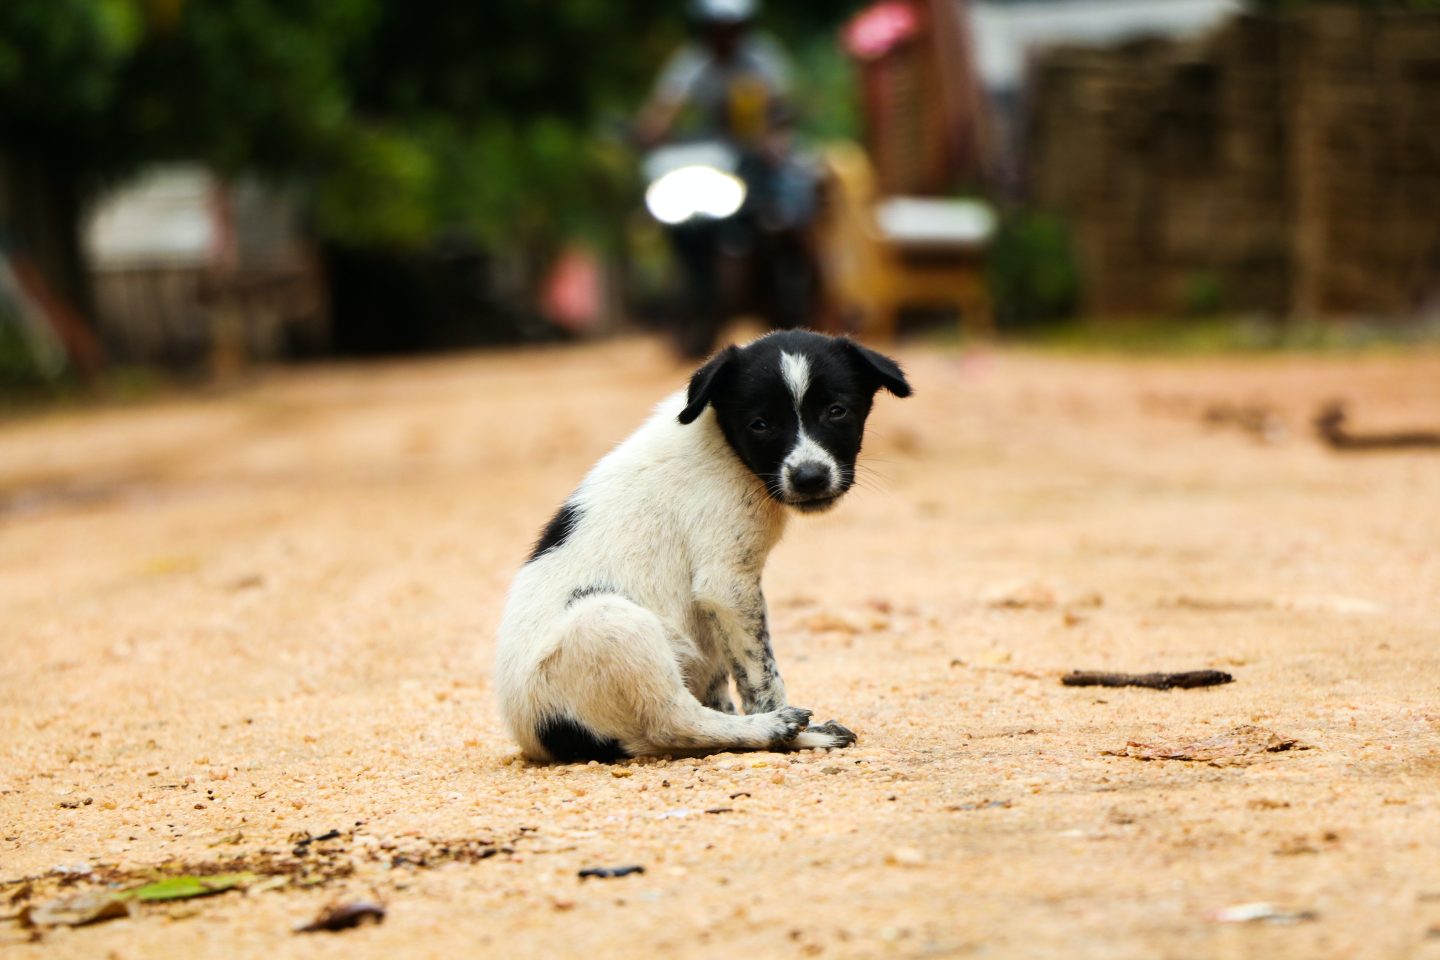 Street dog sitting on sand